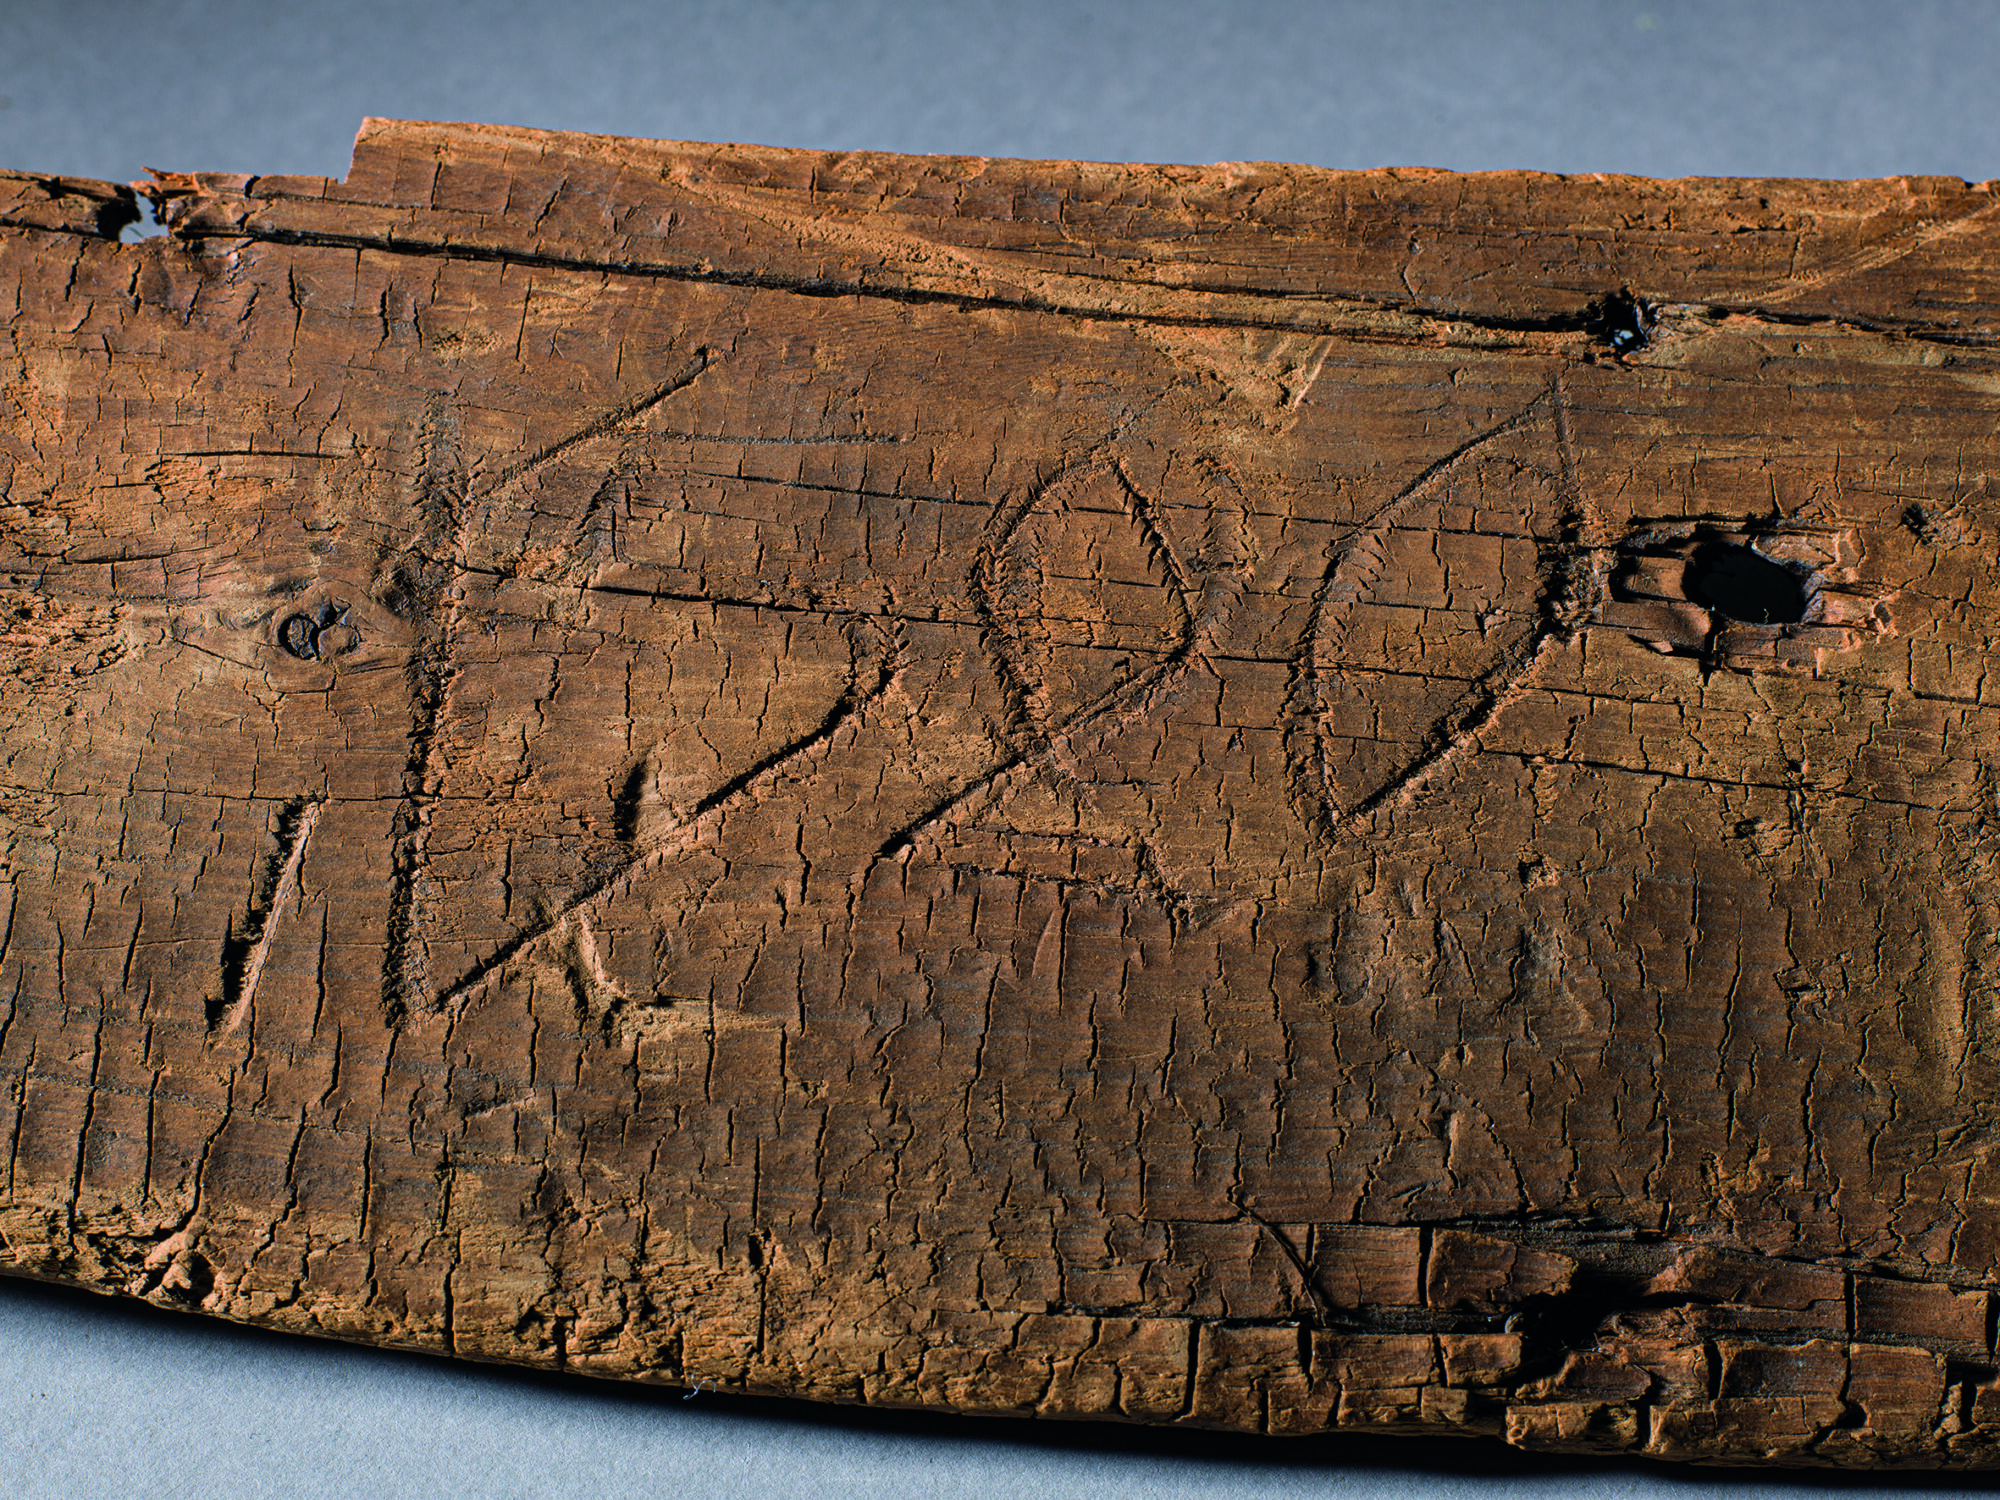 Nærbilde av båtbord med runeinnskrift.